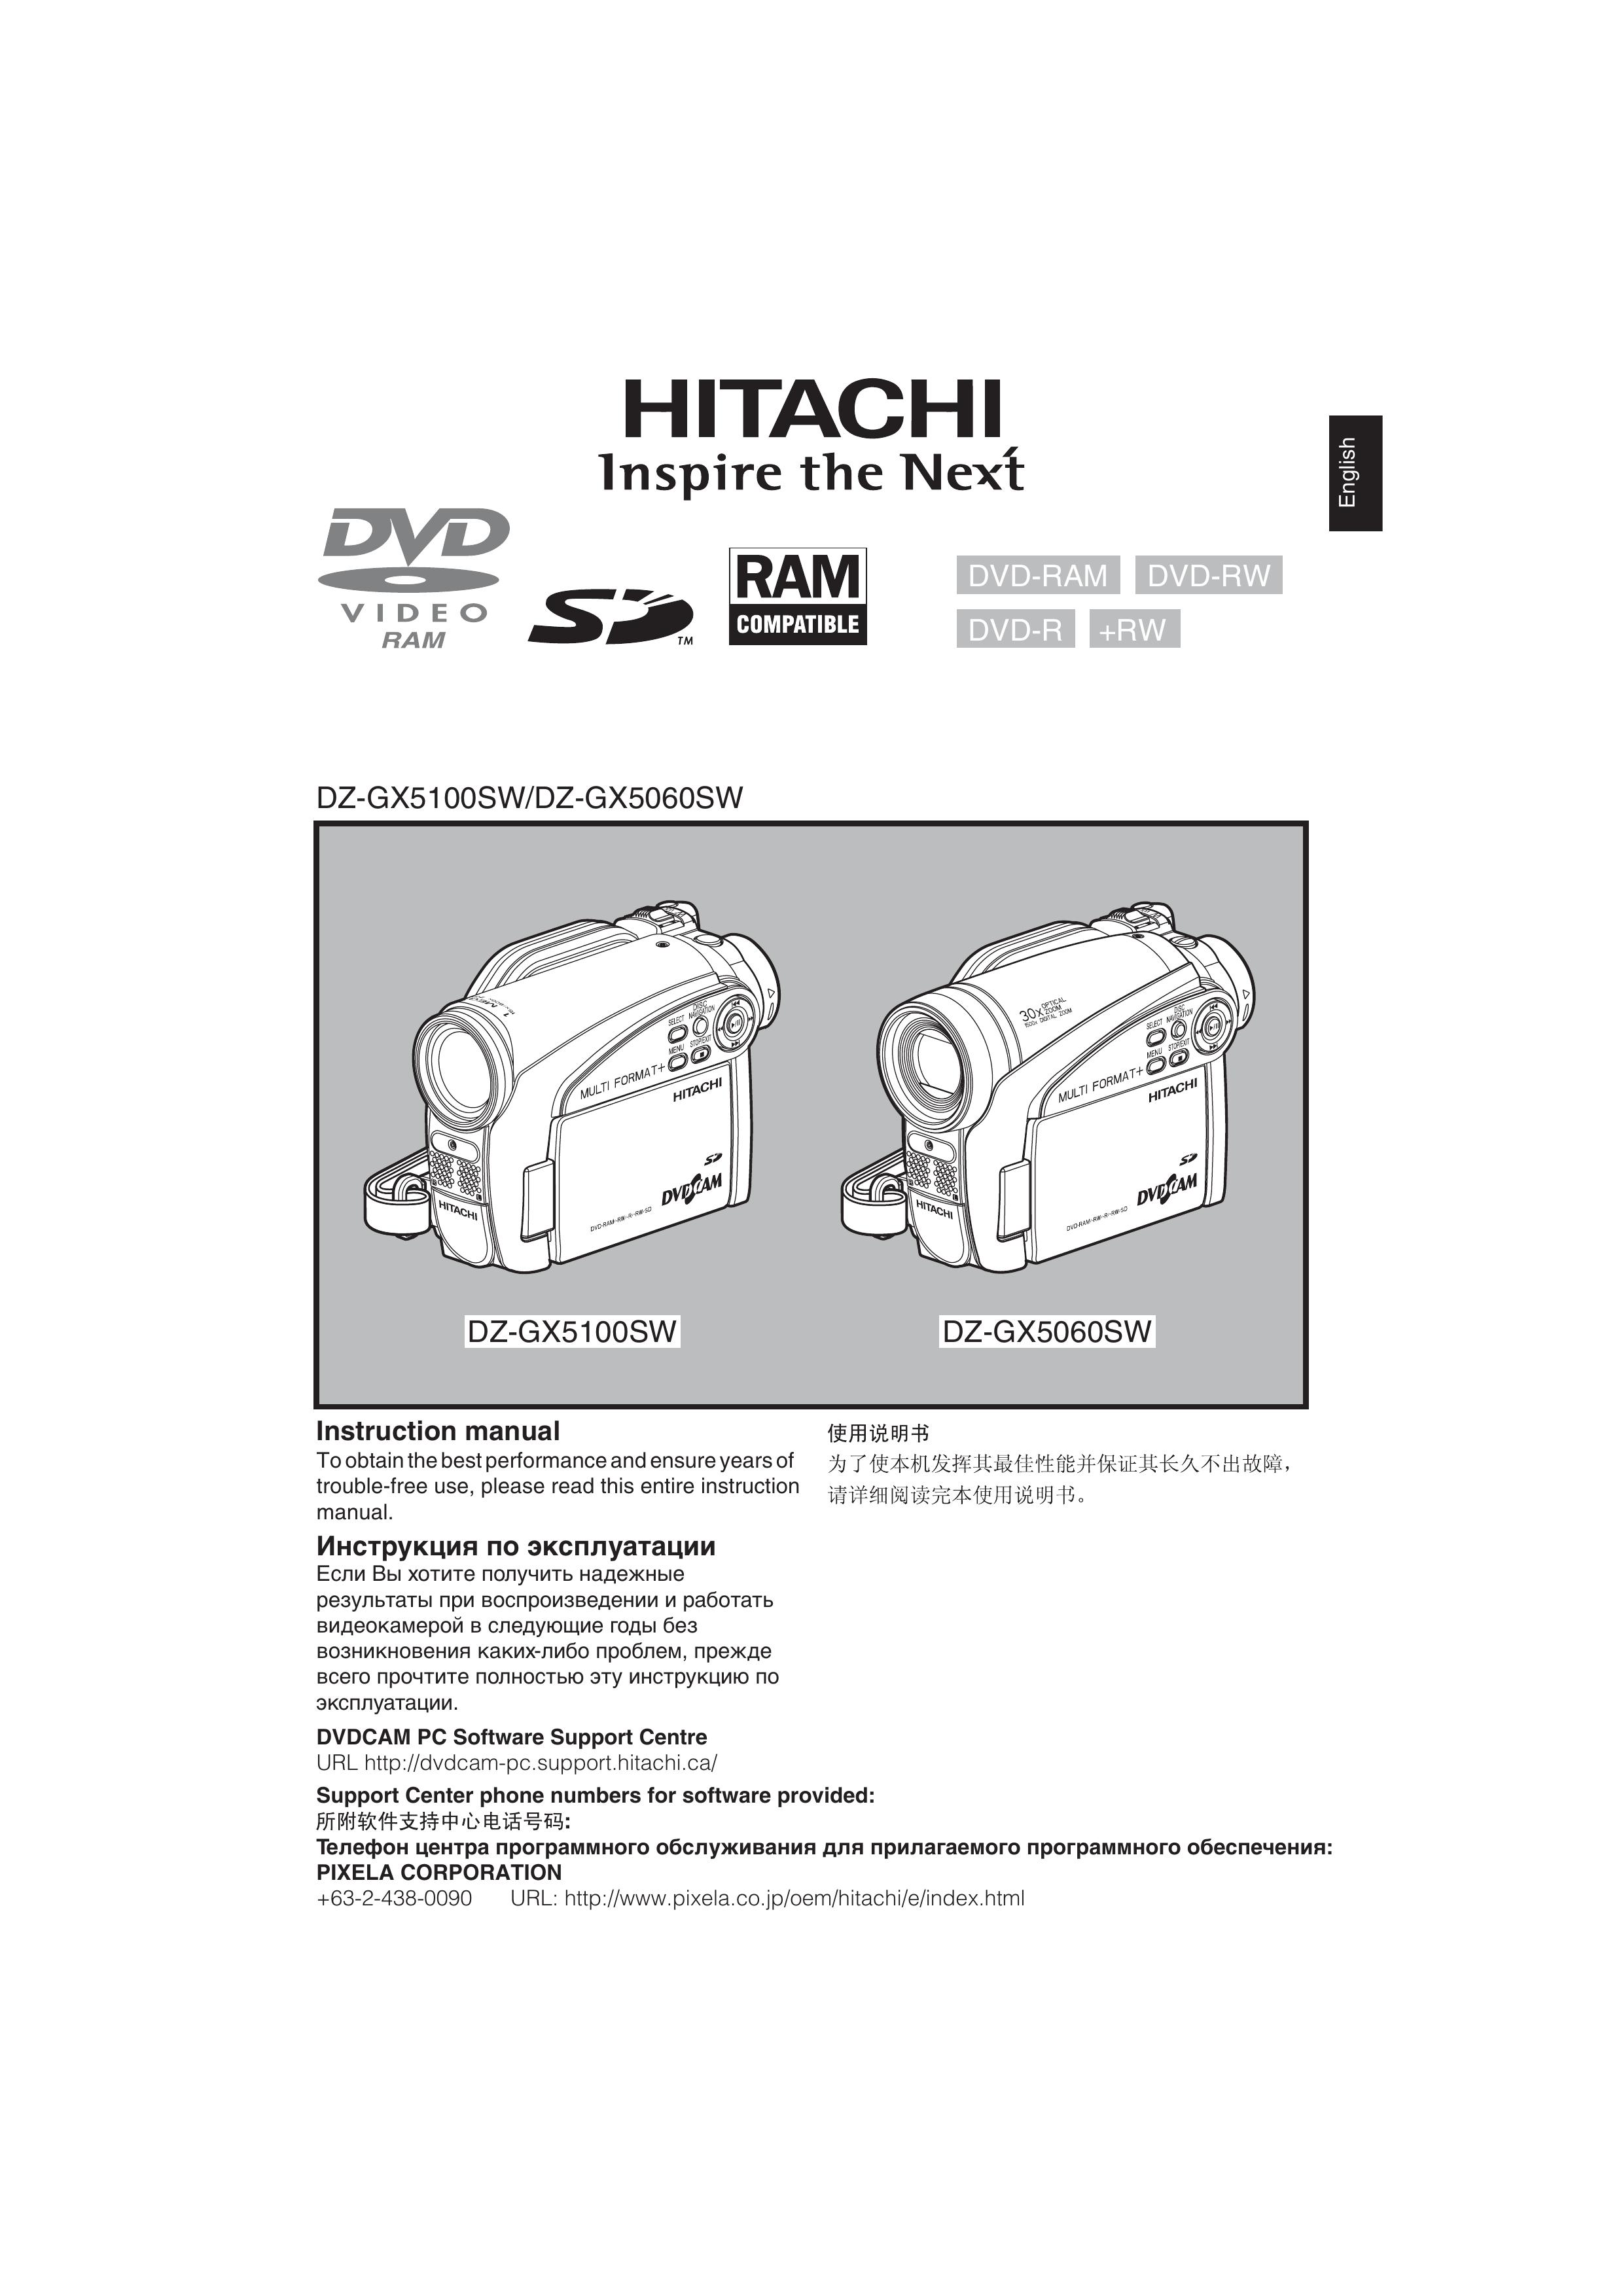 Hitachi DZ-GX5060SW Camcorder User Manual